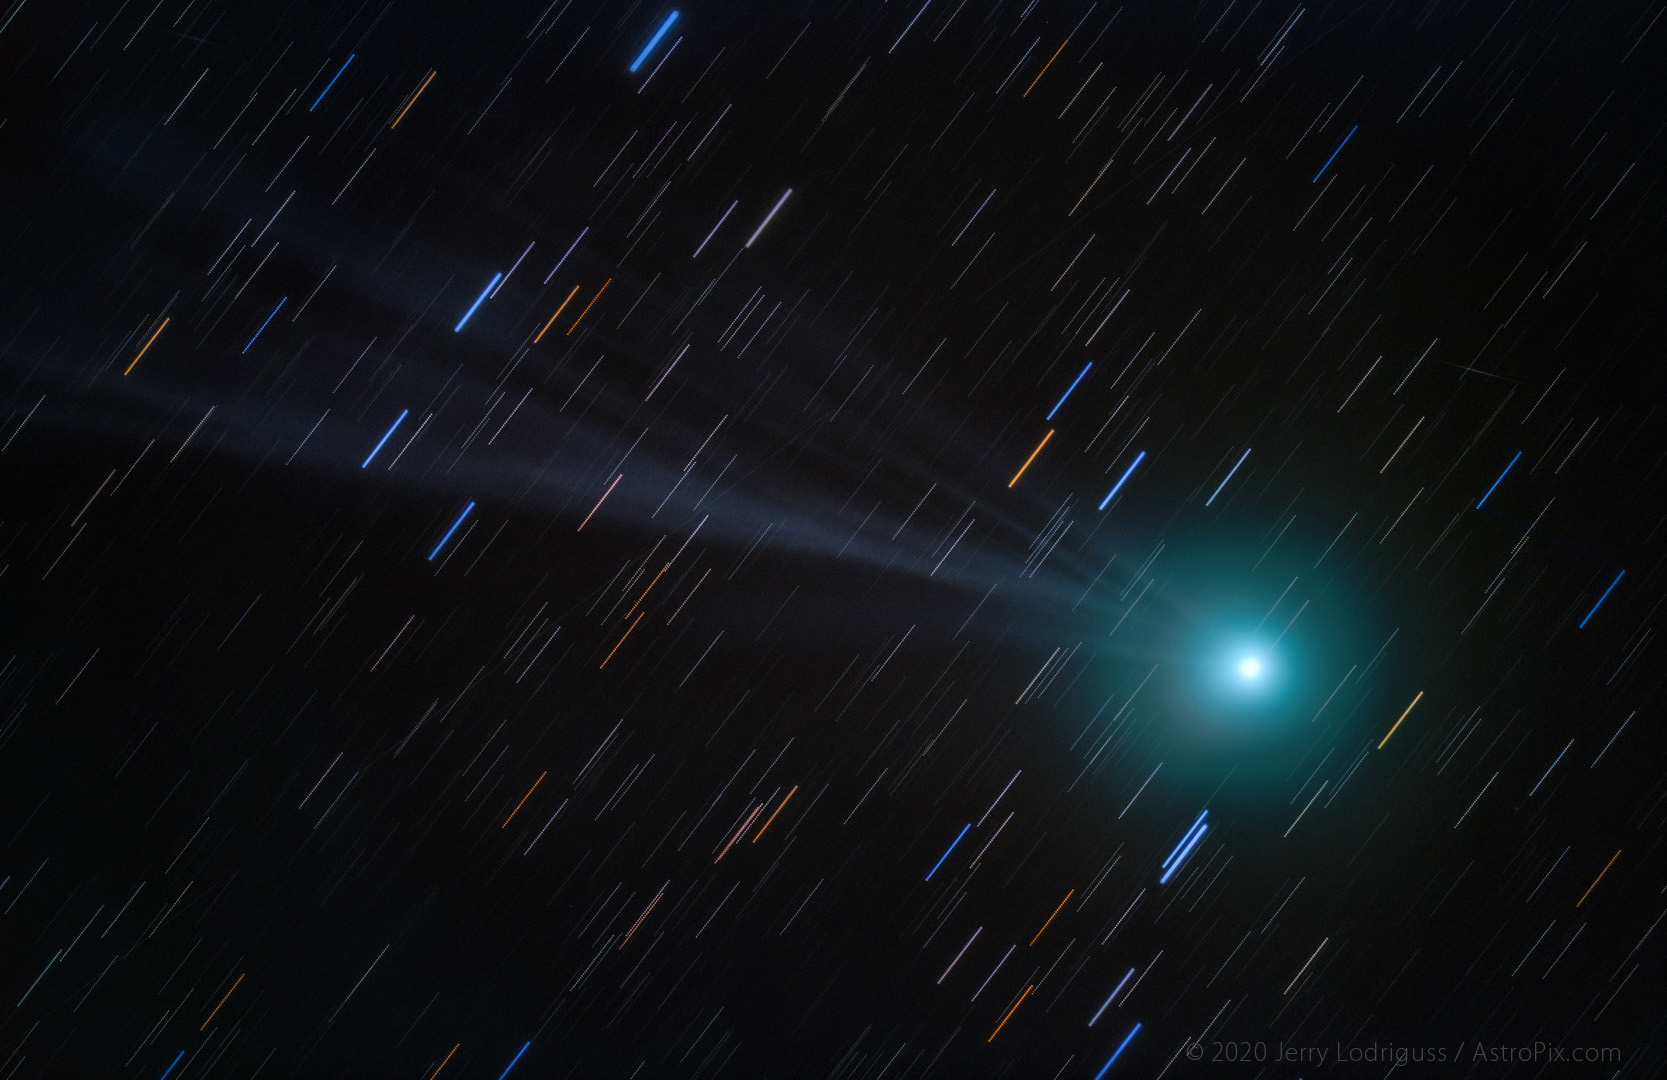 Comet C/2014 Q2 Lovejoy on January 10, 2015.